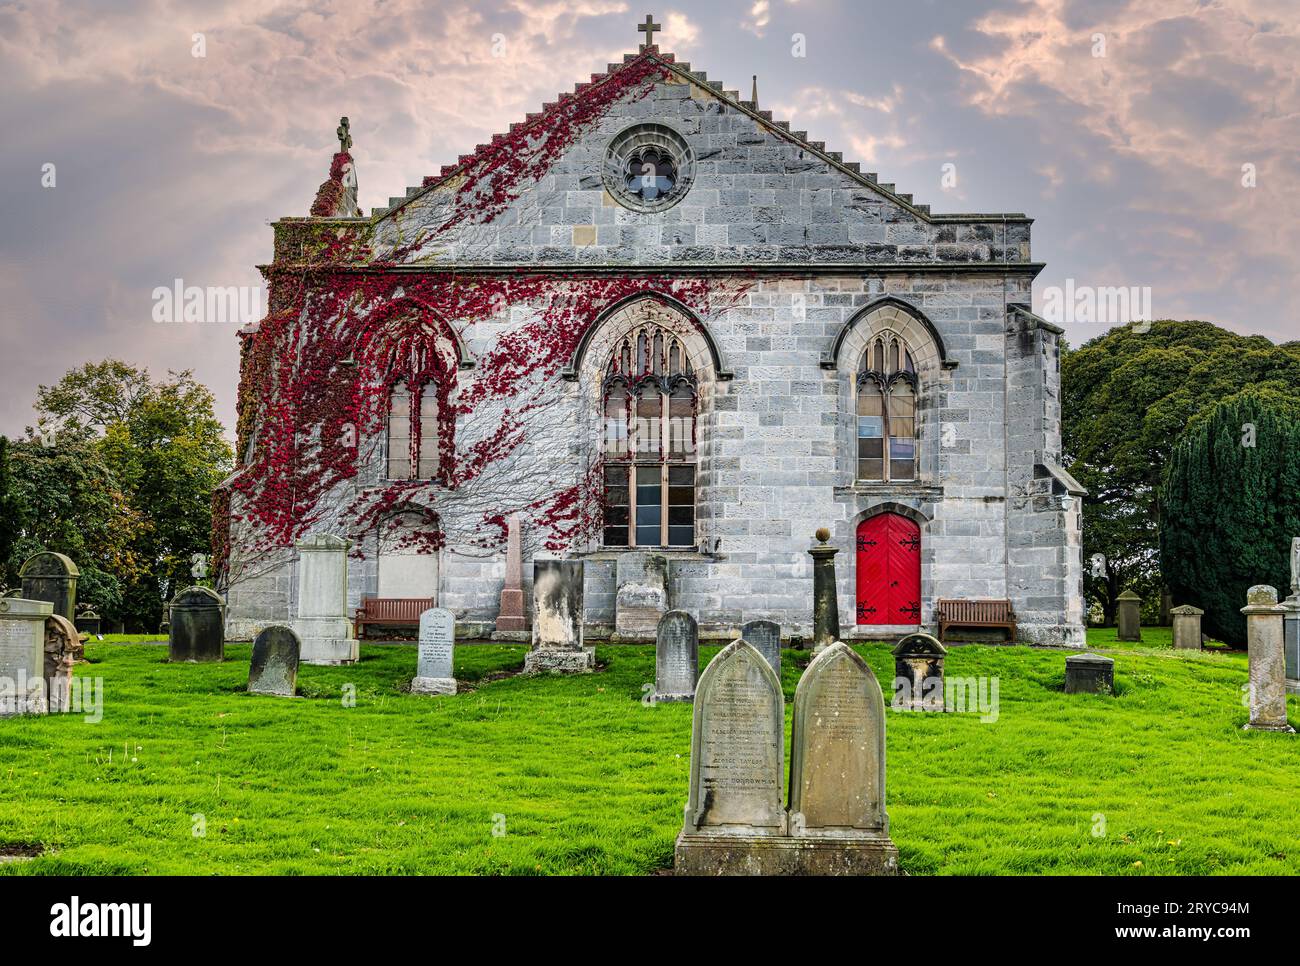 Autumn red ivy gorwing on wall of Liberton Kirk or Church with graveyard, Edinburgh, Scotland, UK Stock Photo